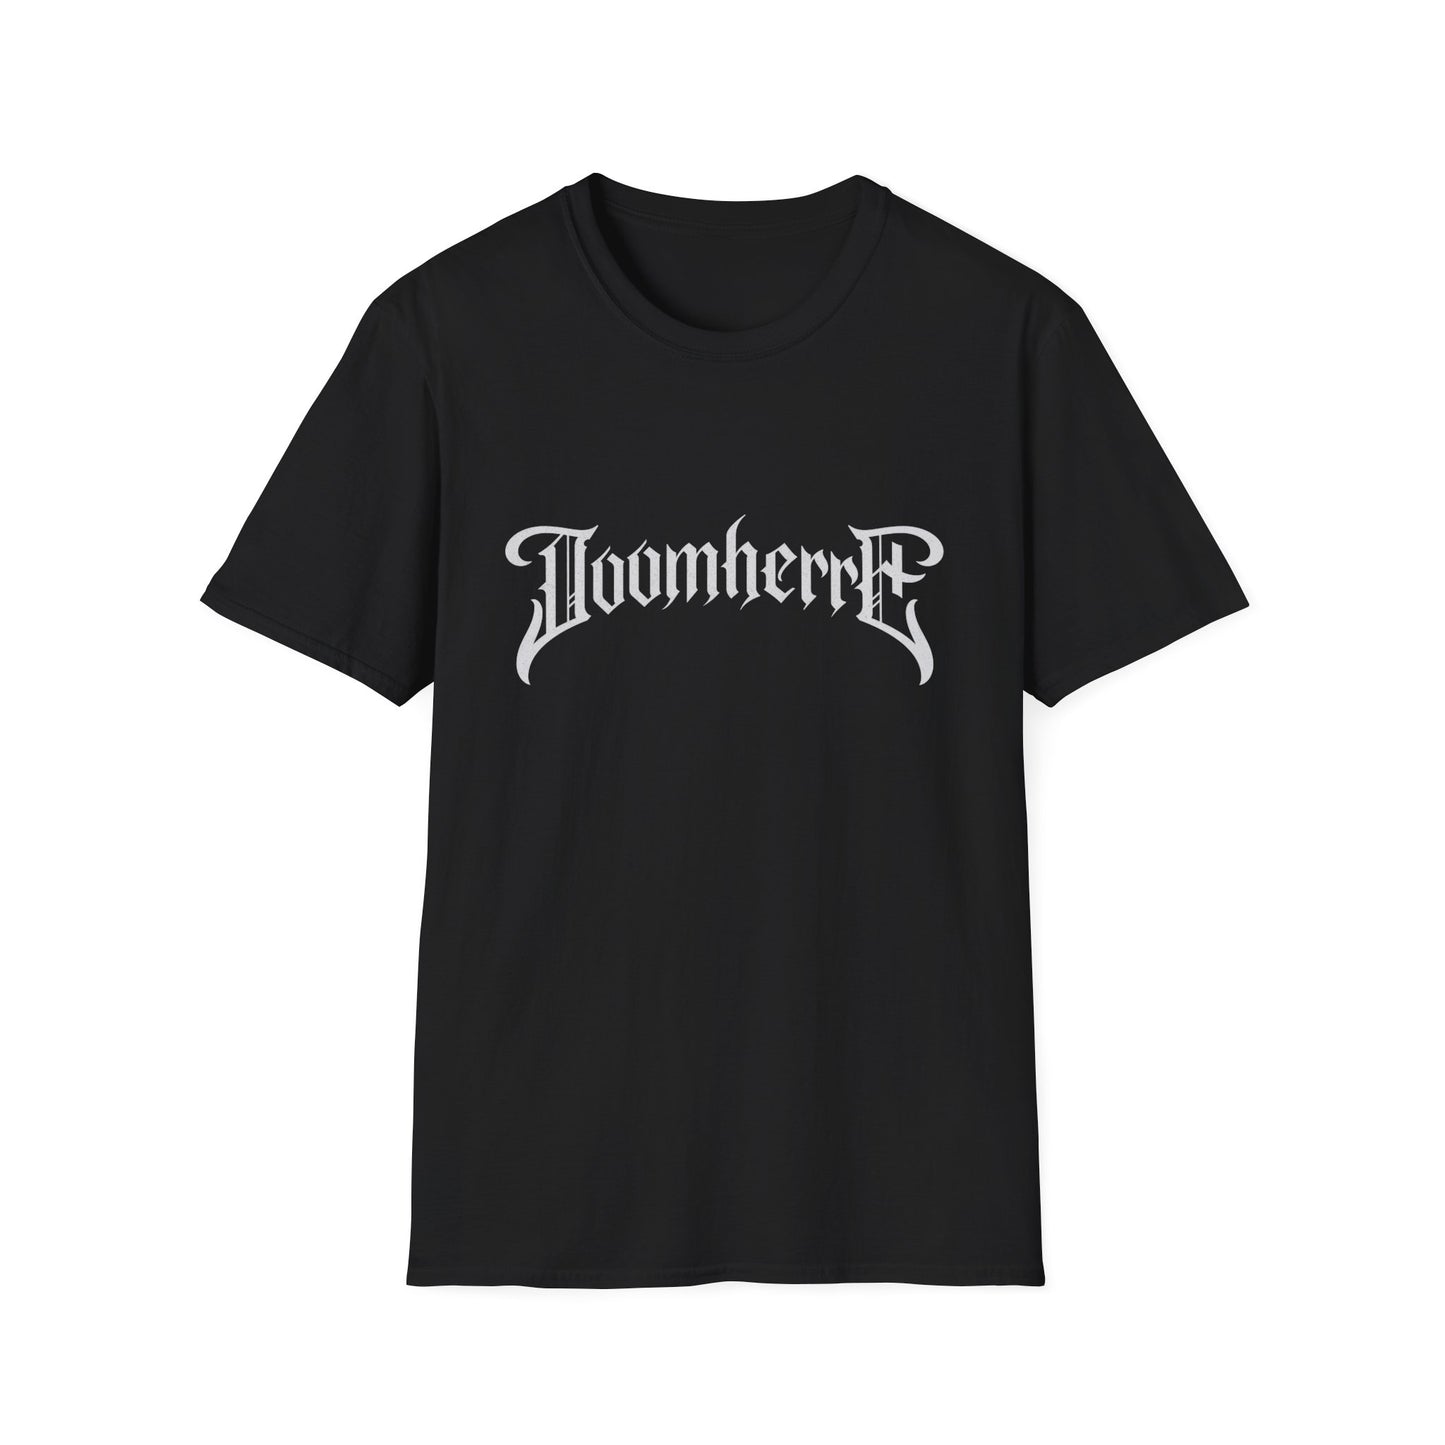 Doomherre Logo T-Shirt